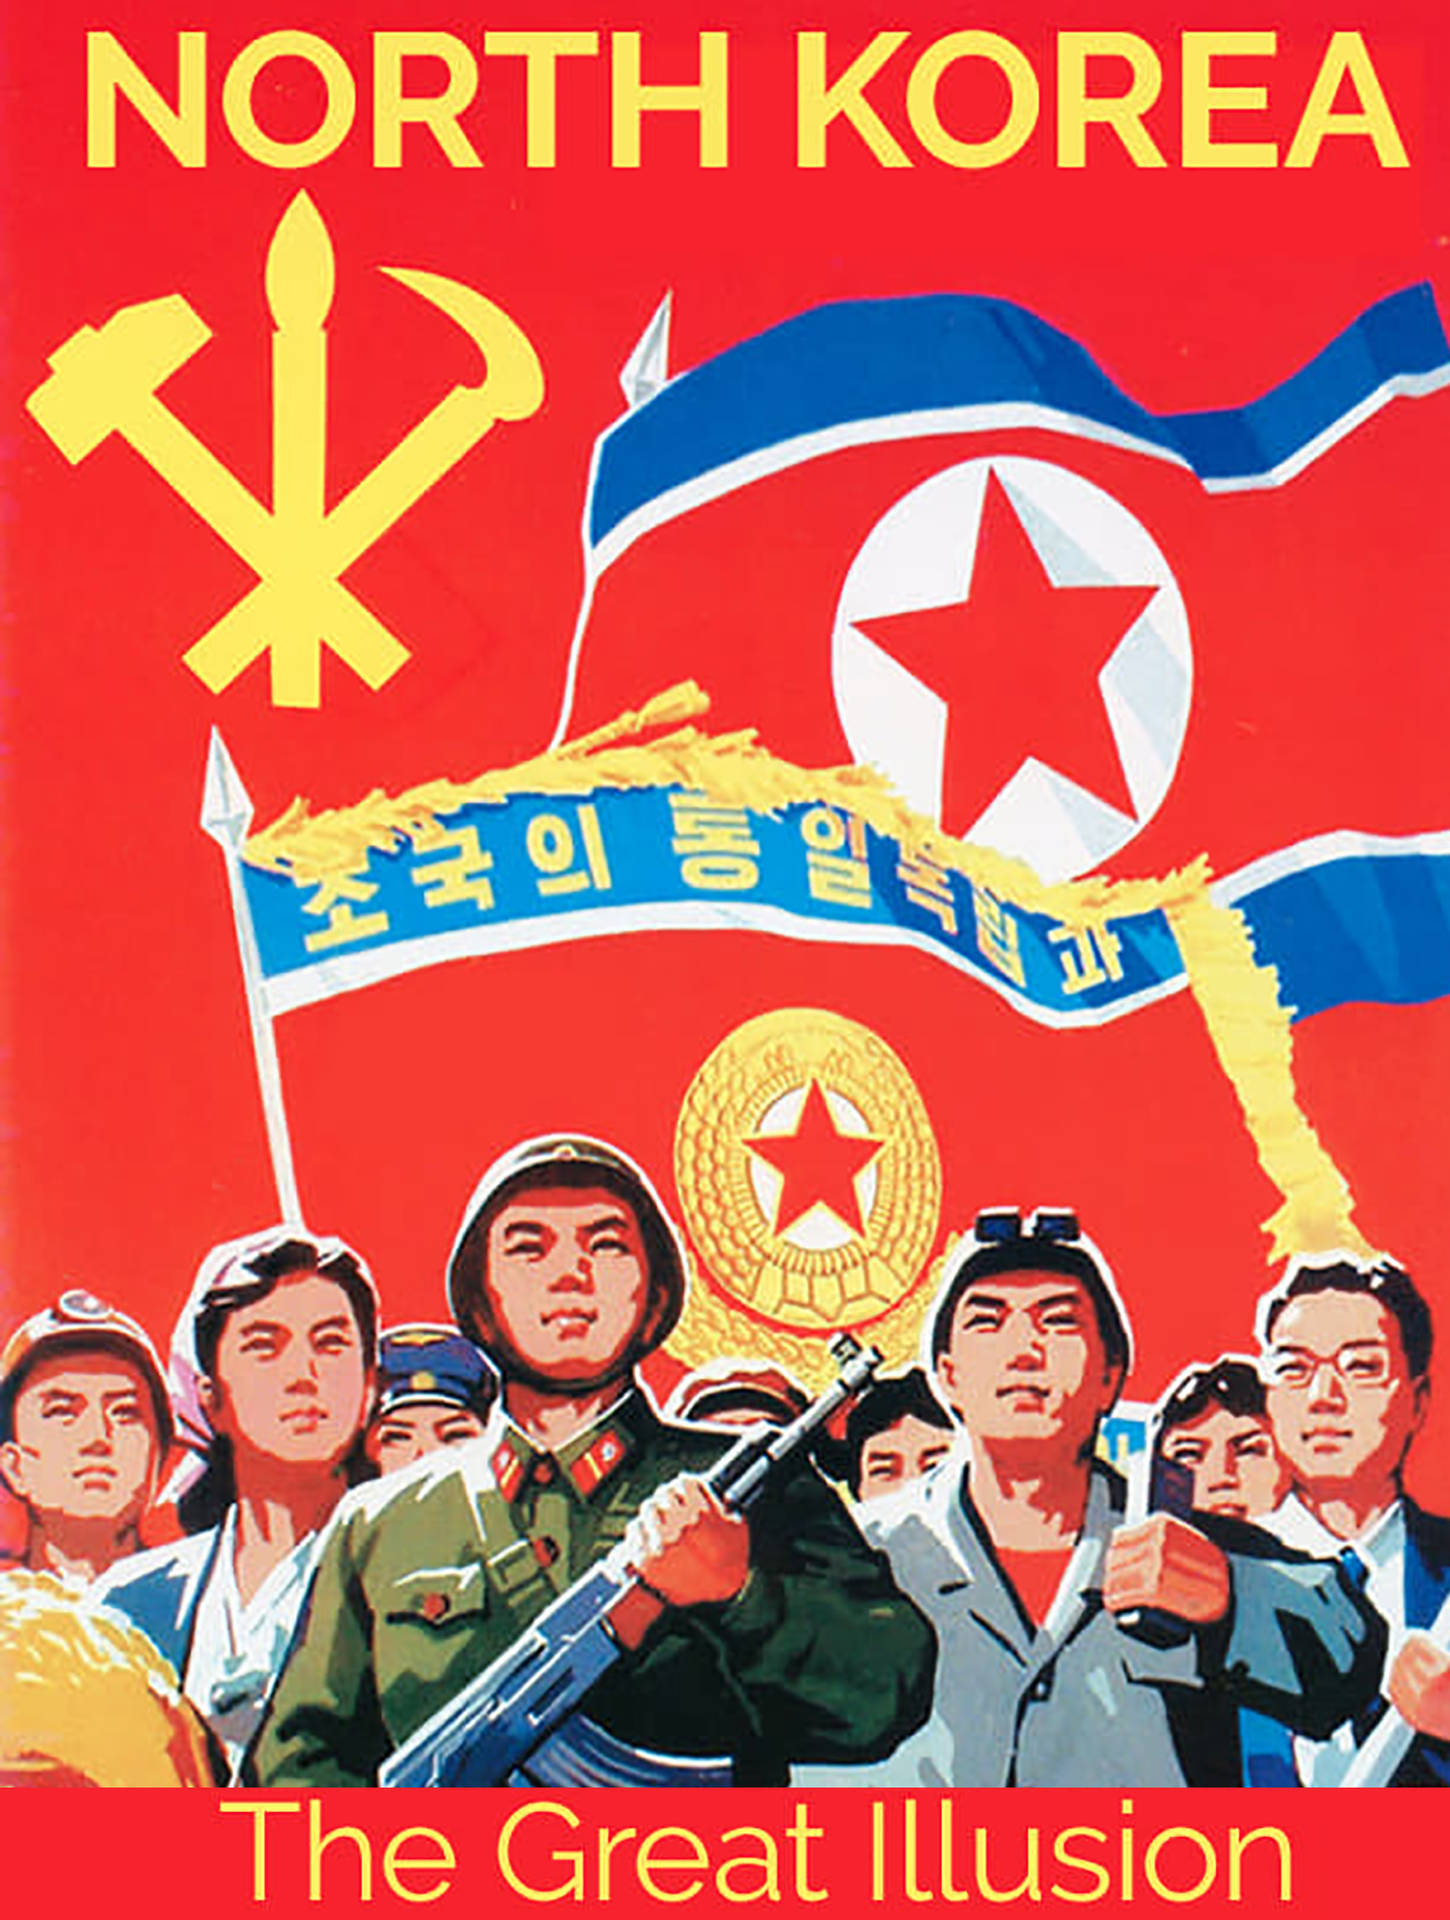 North Korea The Great Illusion Poster